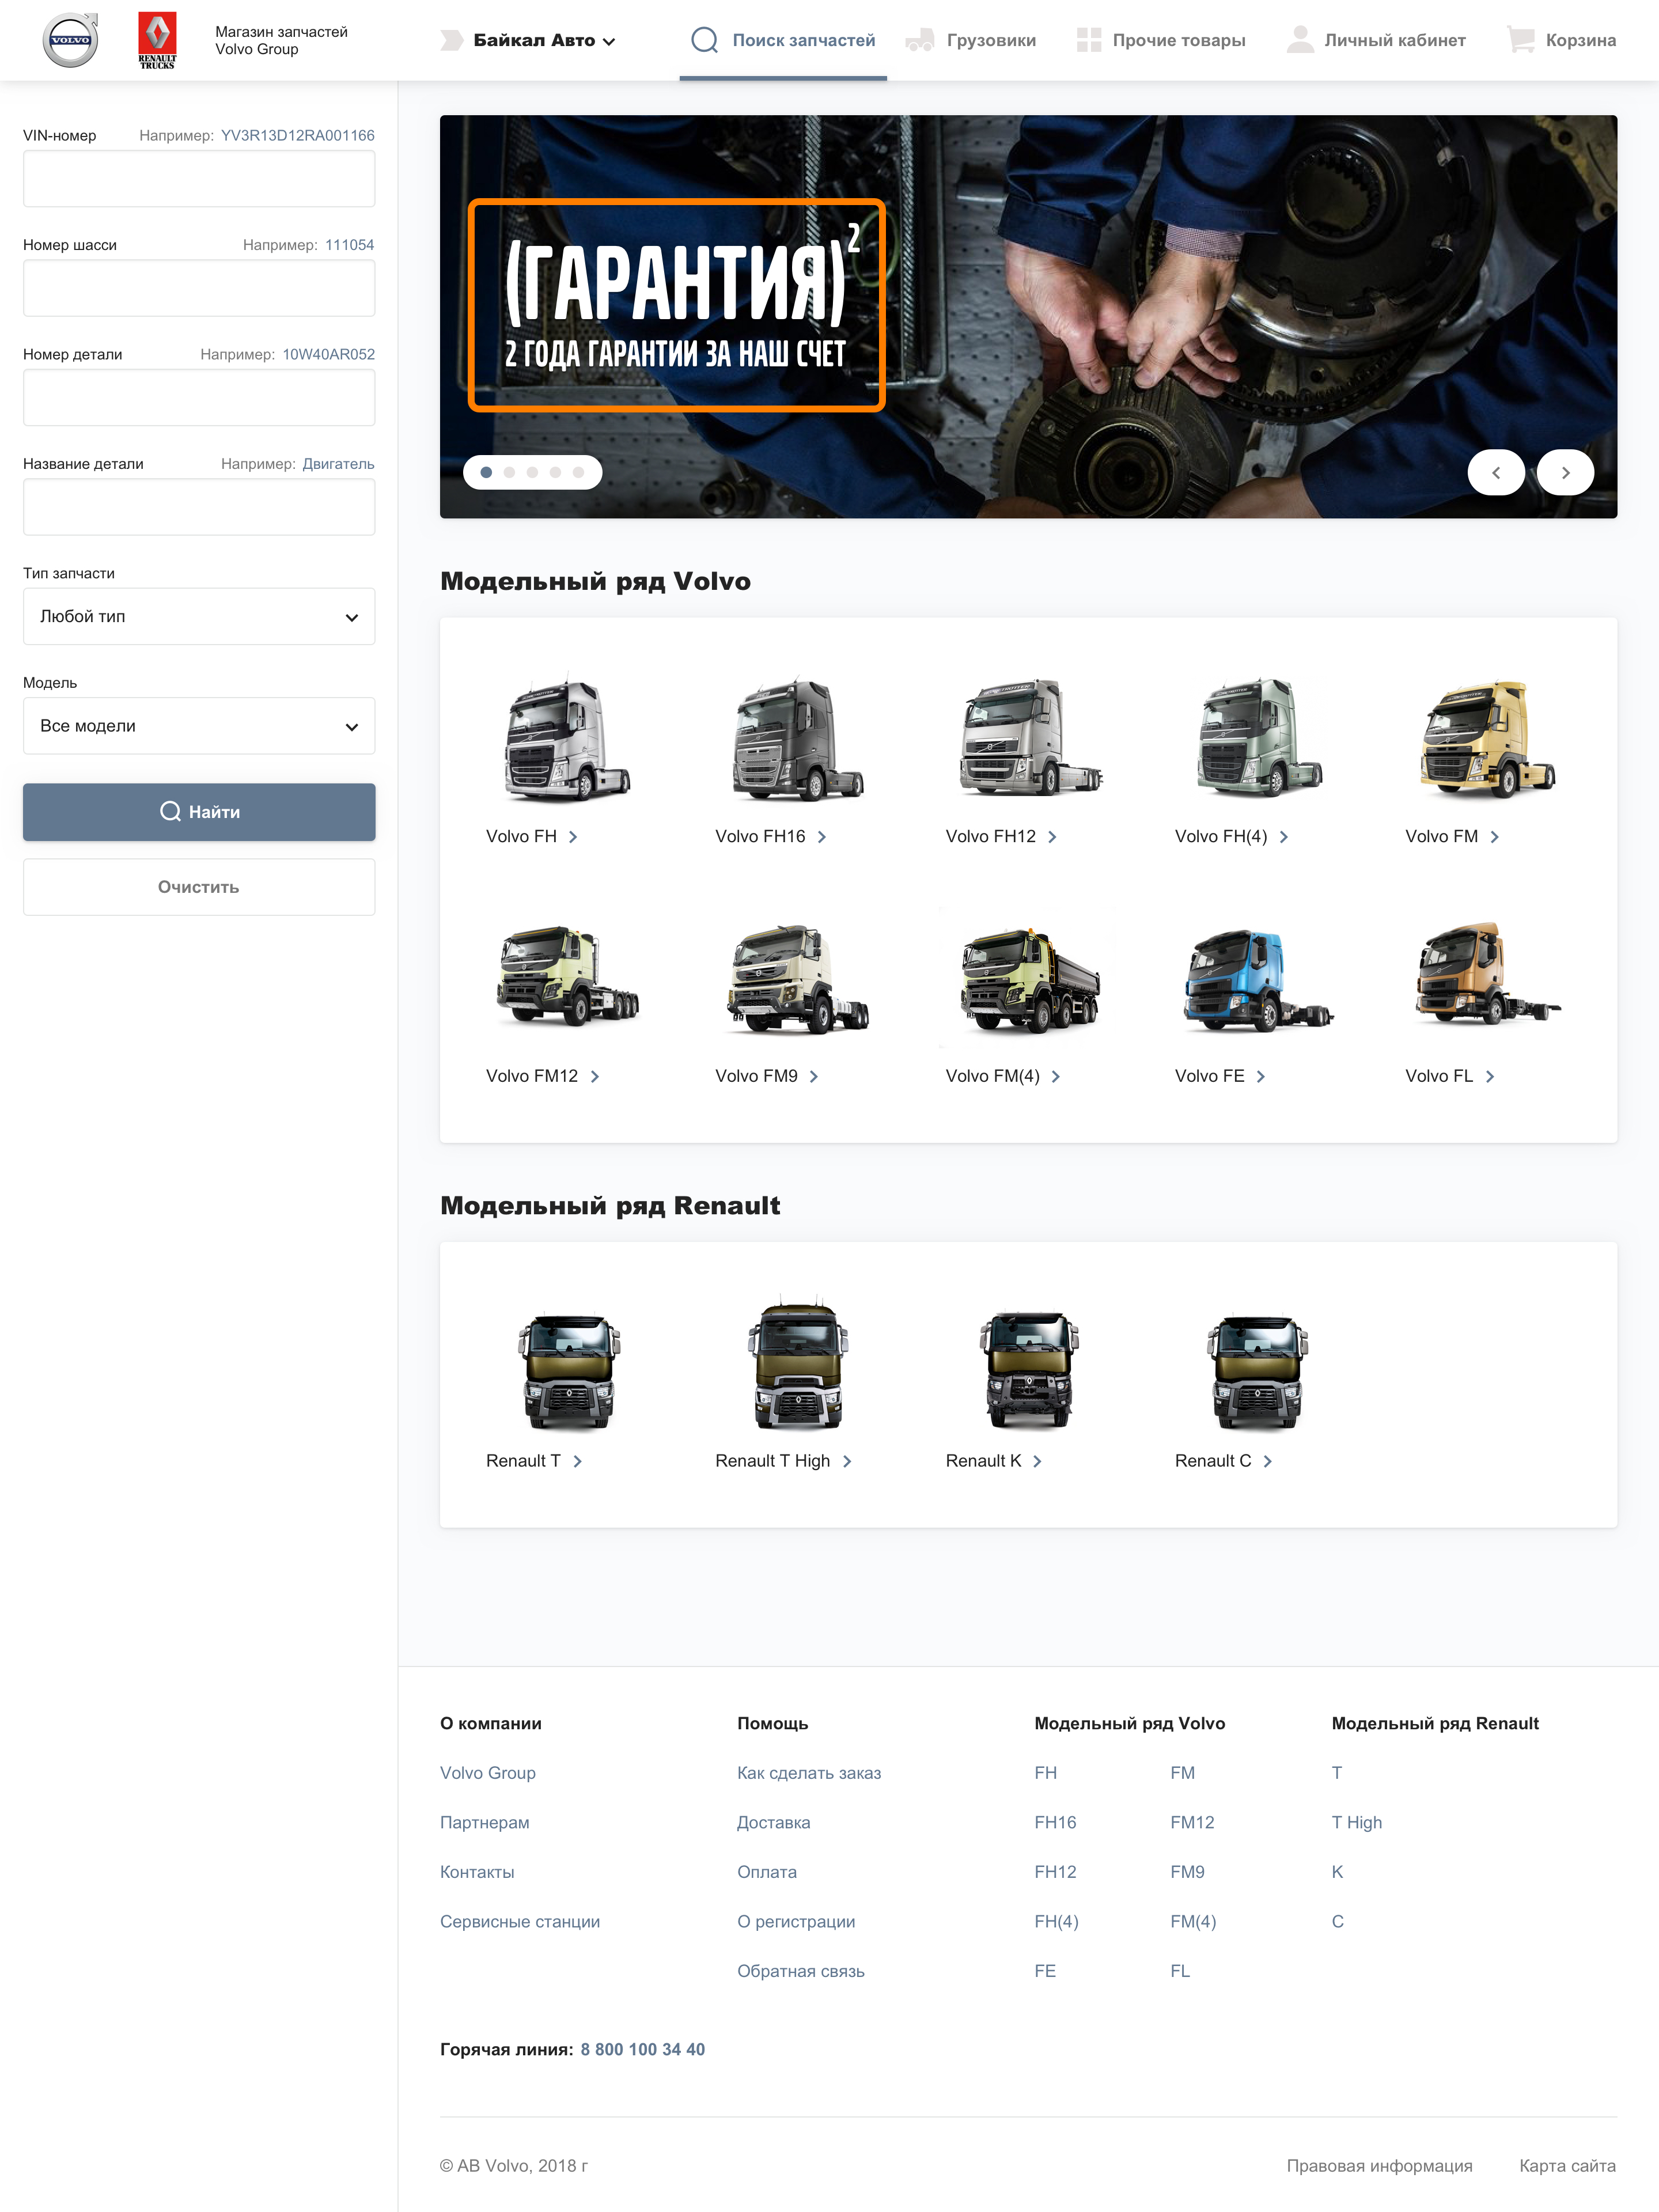 разработка интернет-магазина запчастей volvo и renault trucks